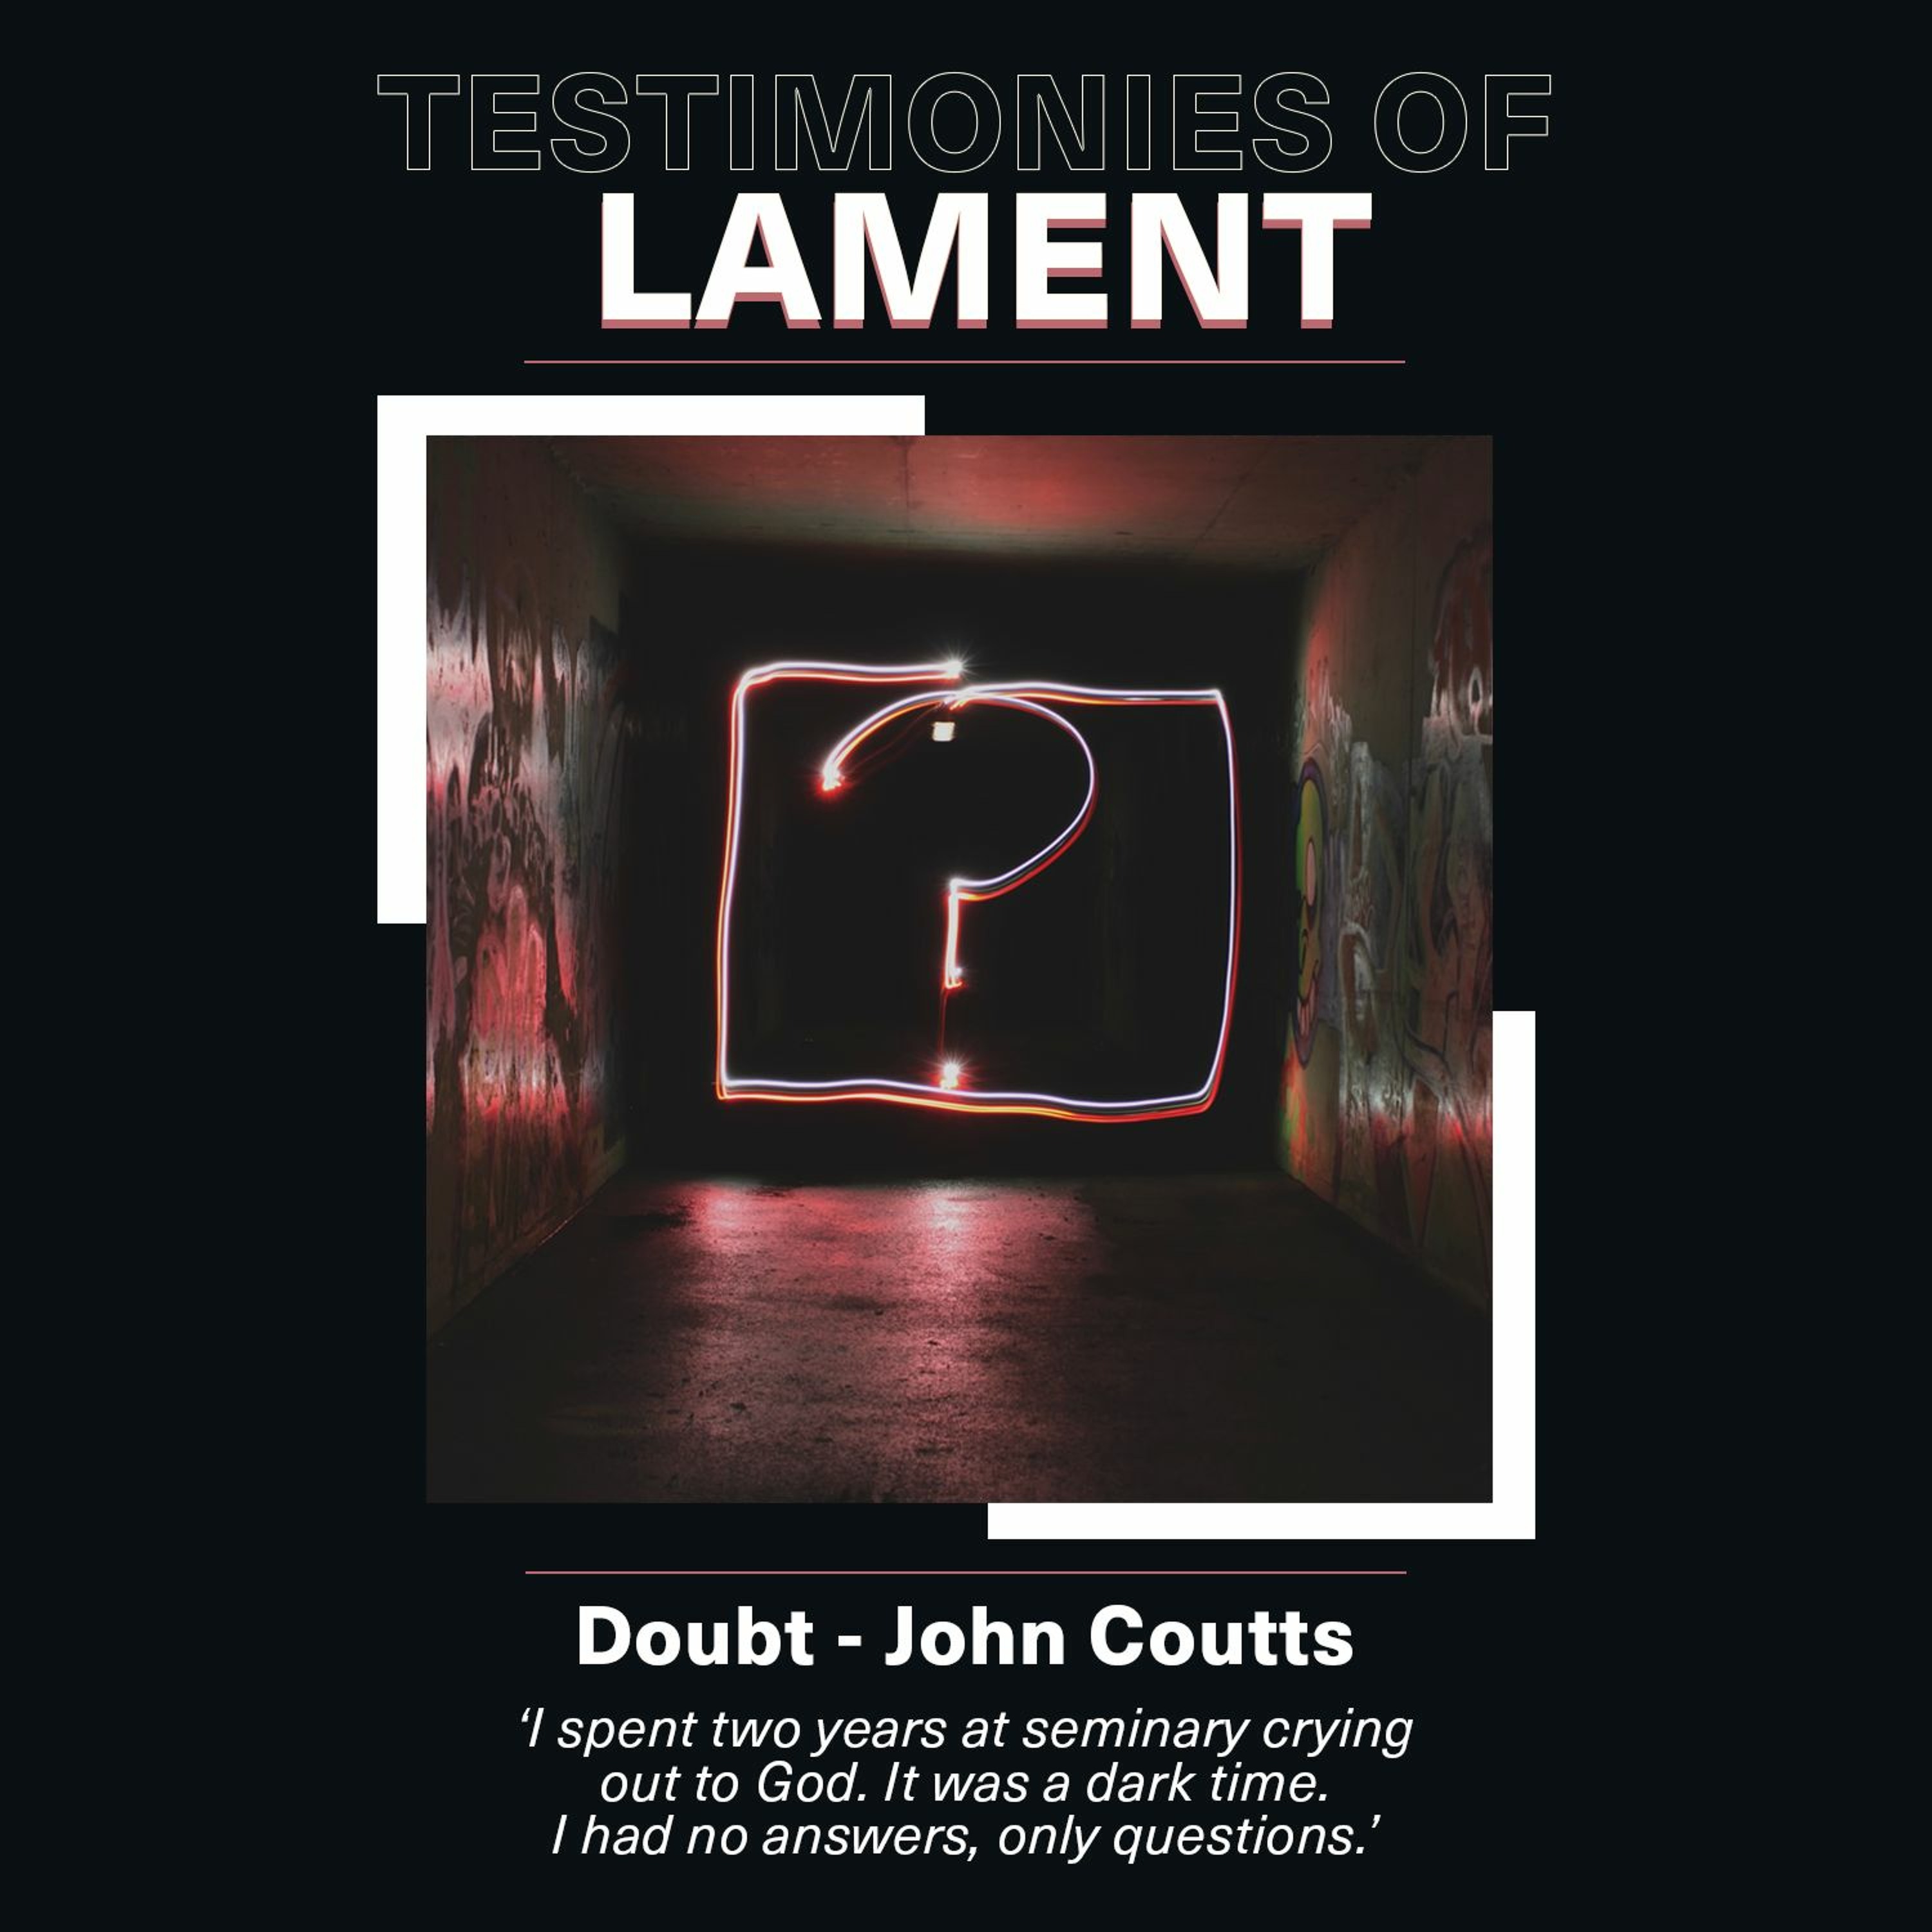 Testimonies of lament - Doubt - John Coutts